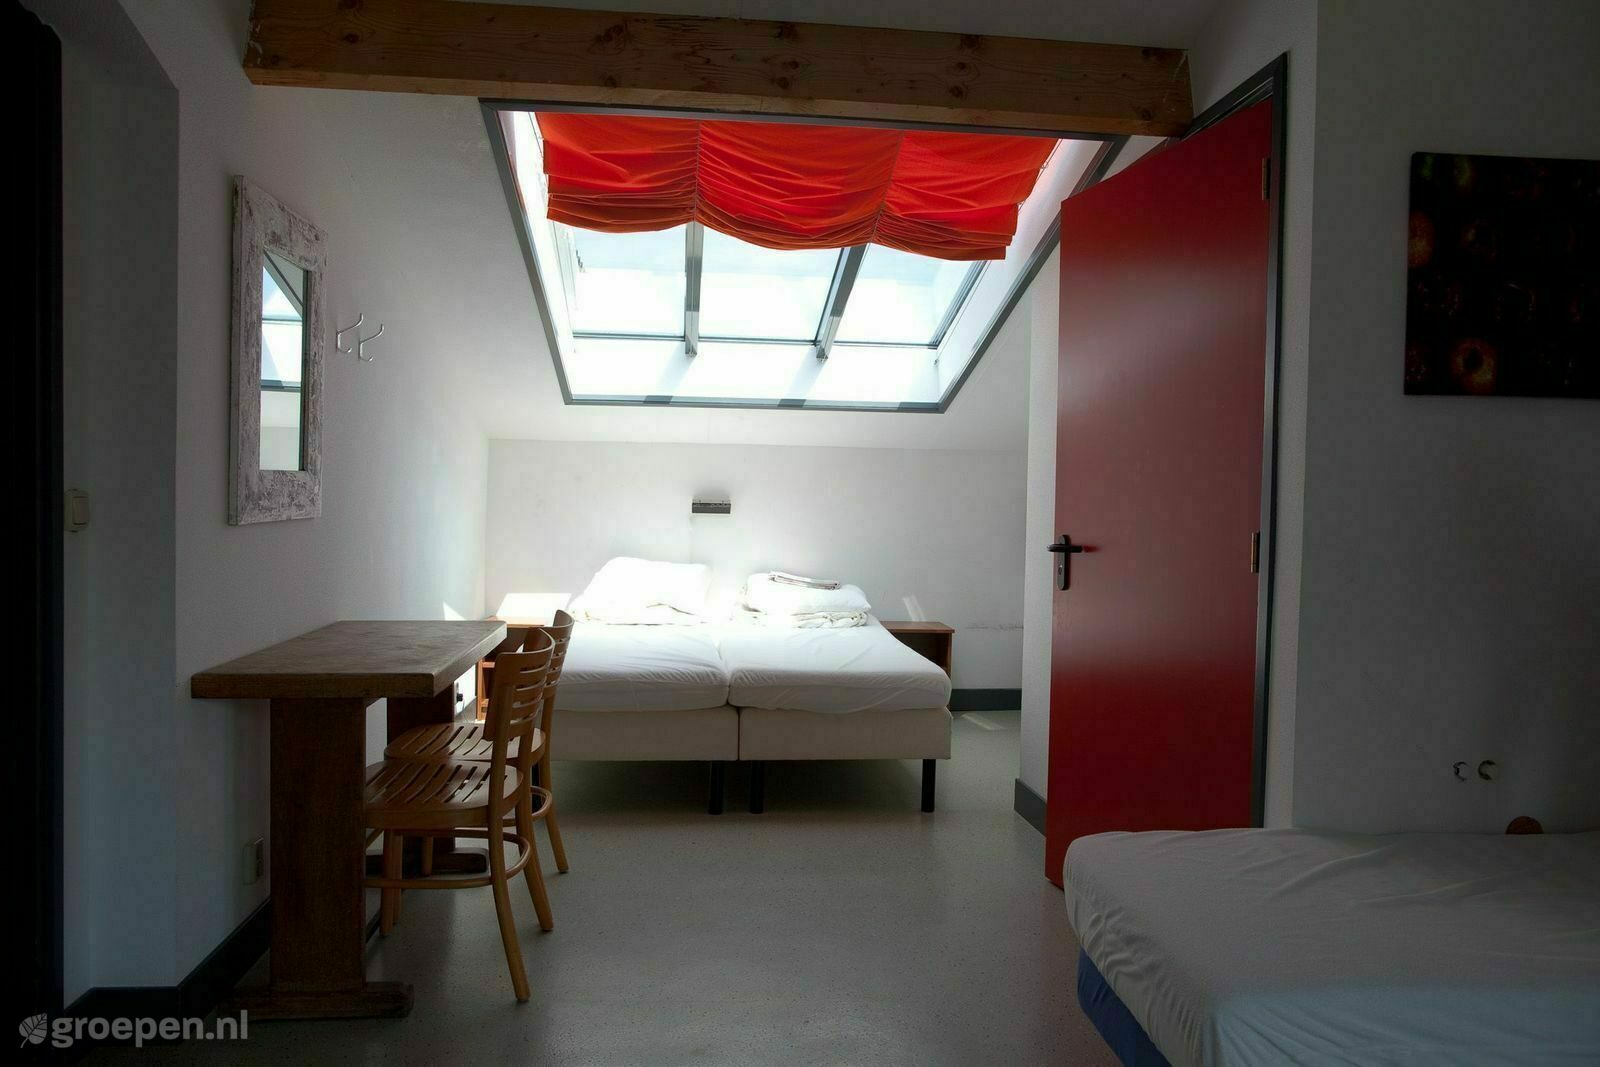 Group accommodation Waarland